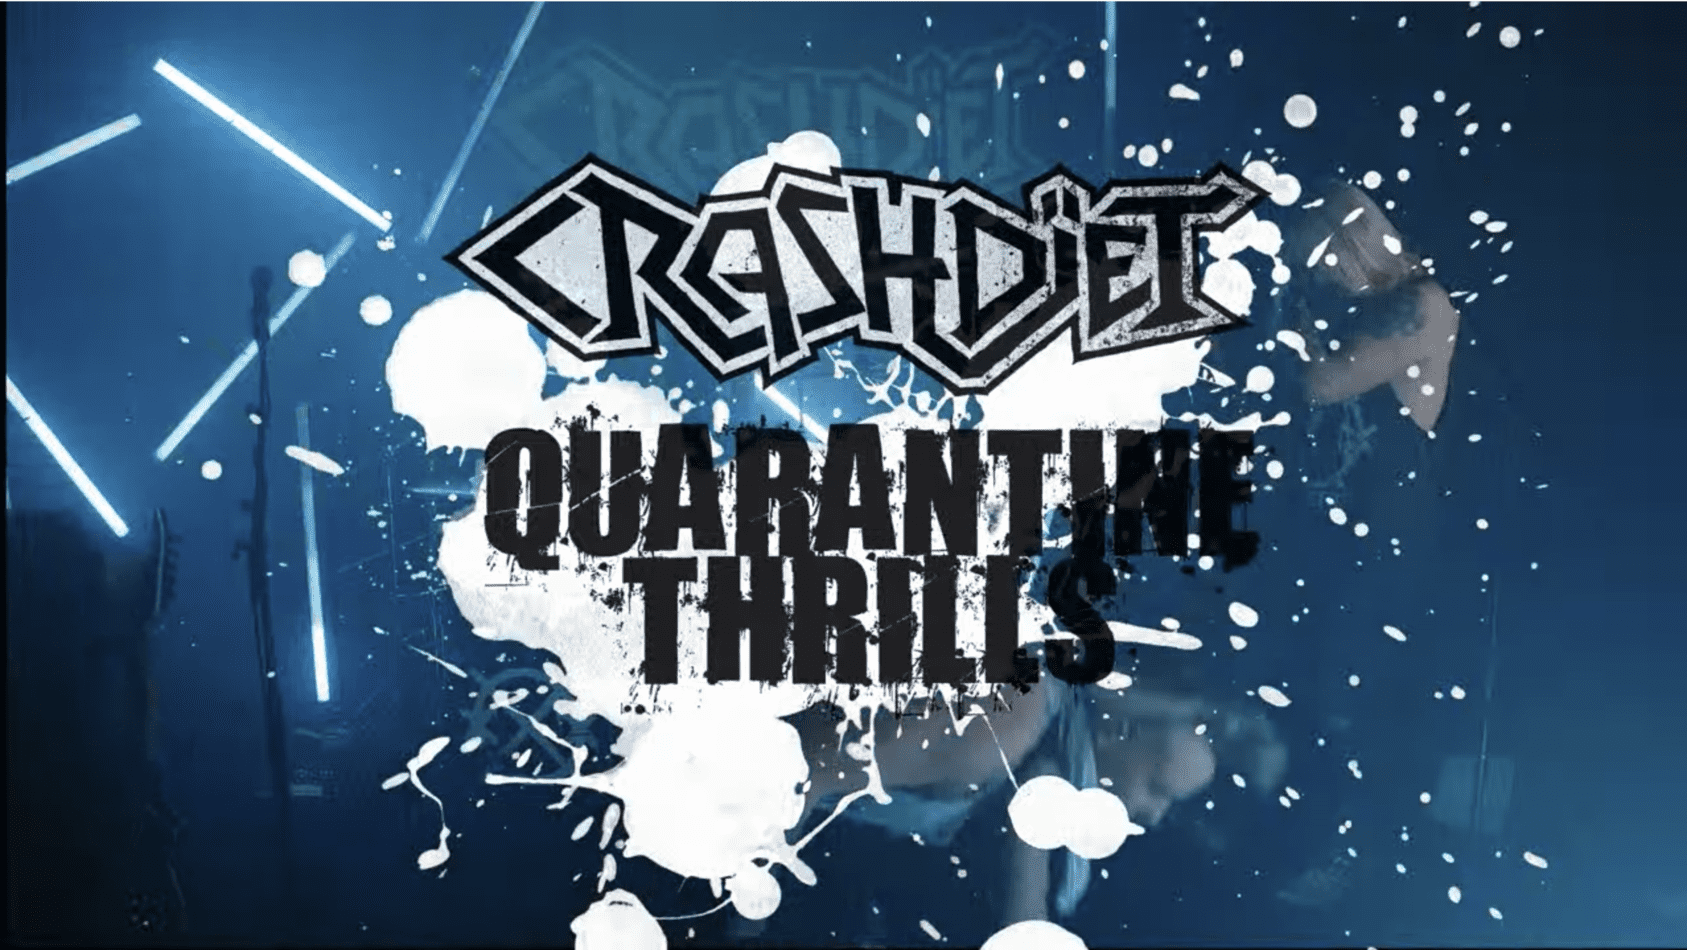 CRASHDIET - Quarantine Thrills Live! (Online Concert Review)